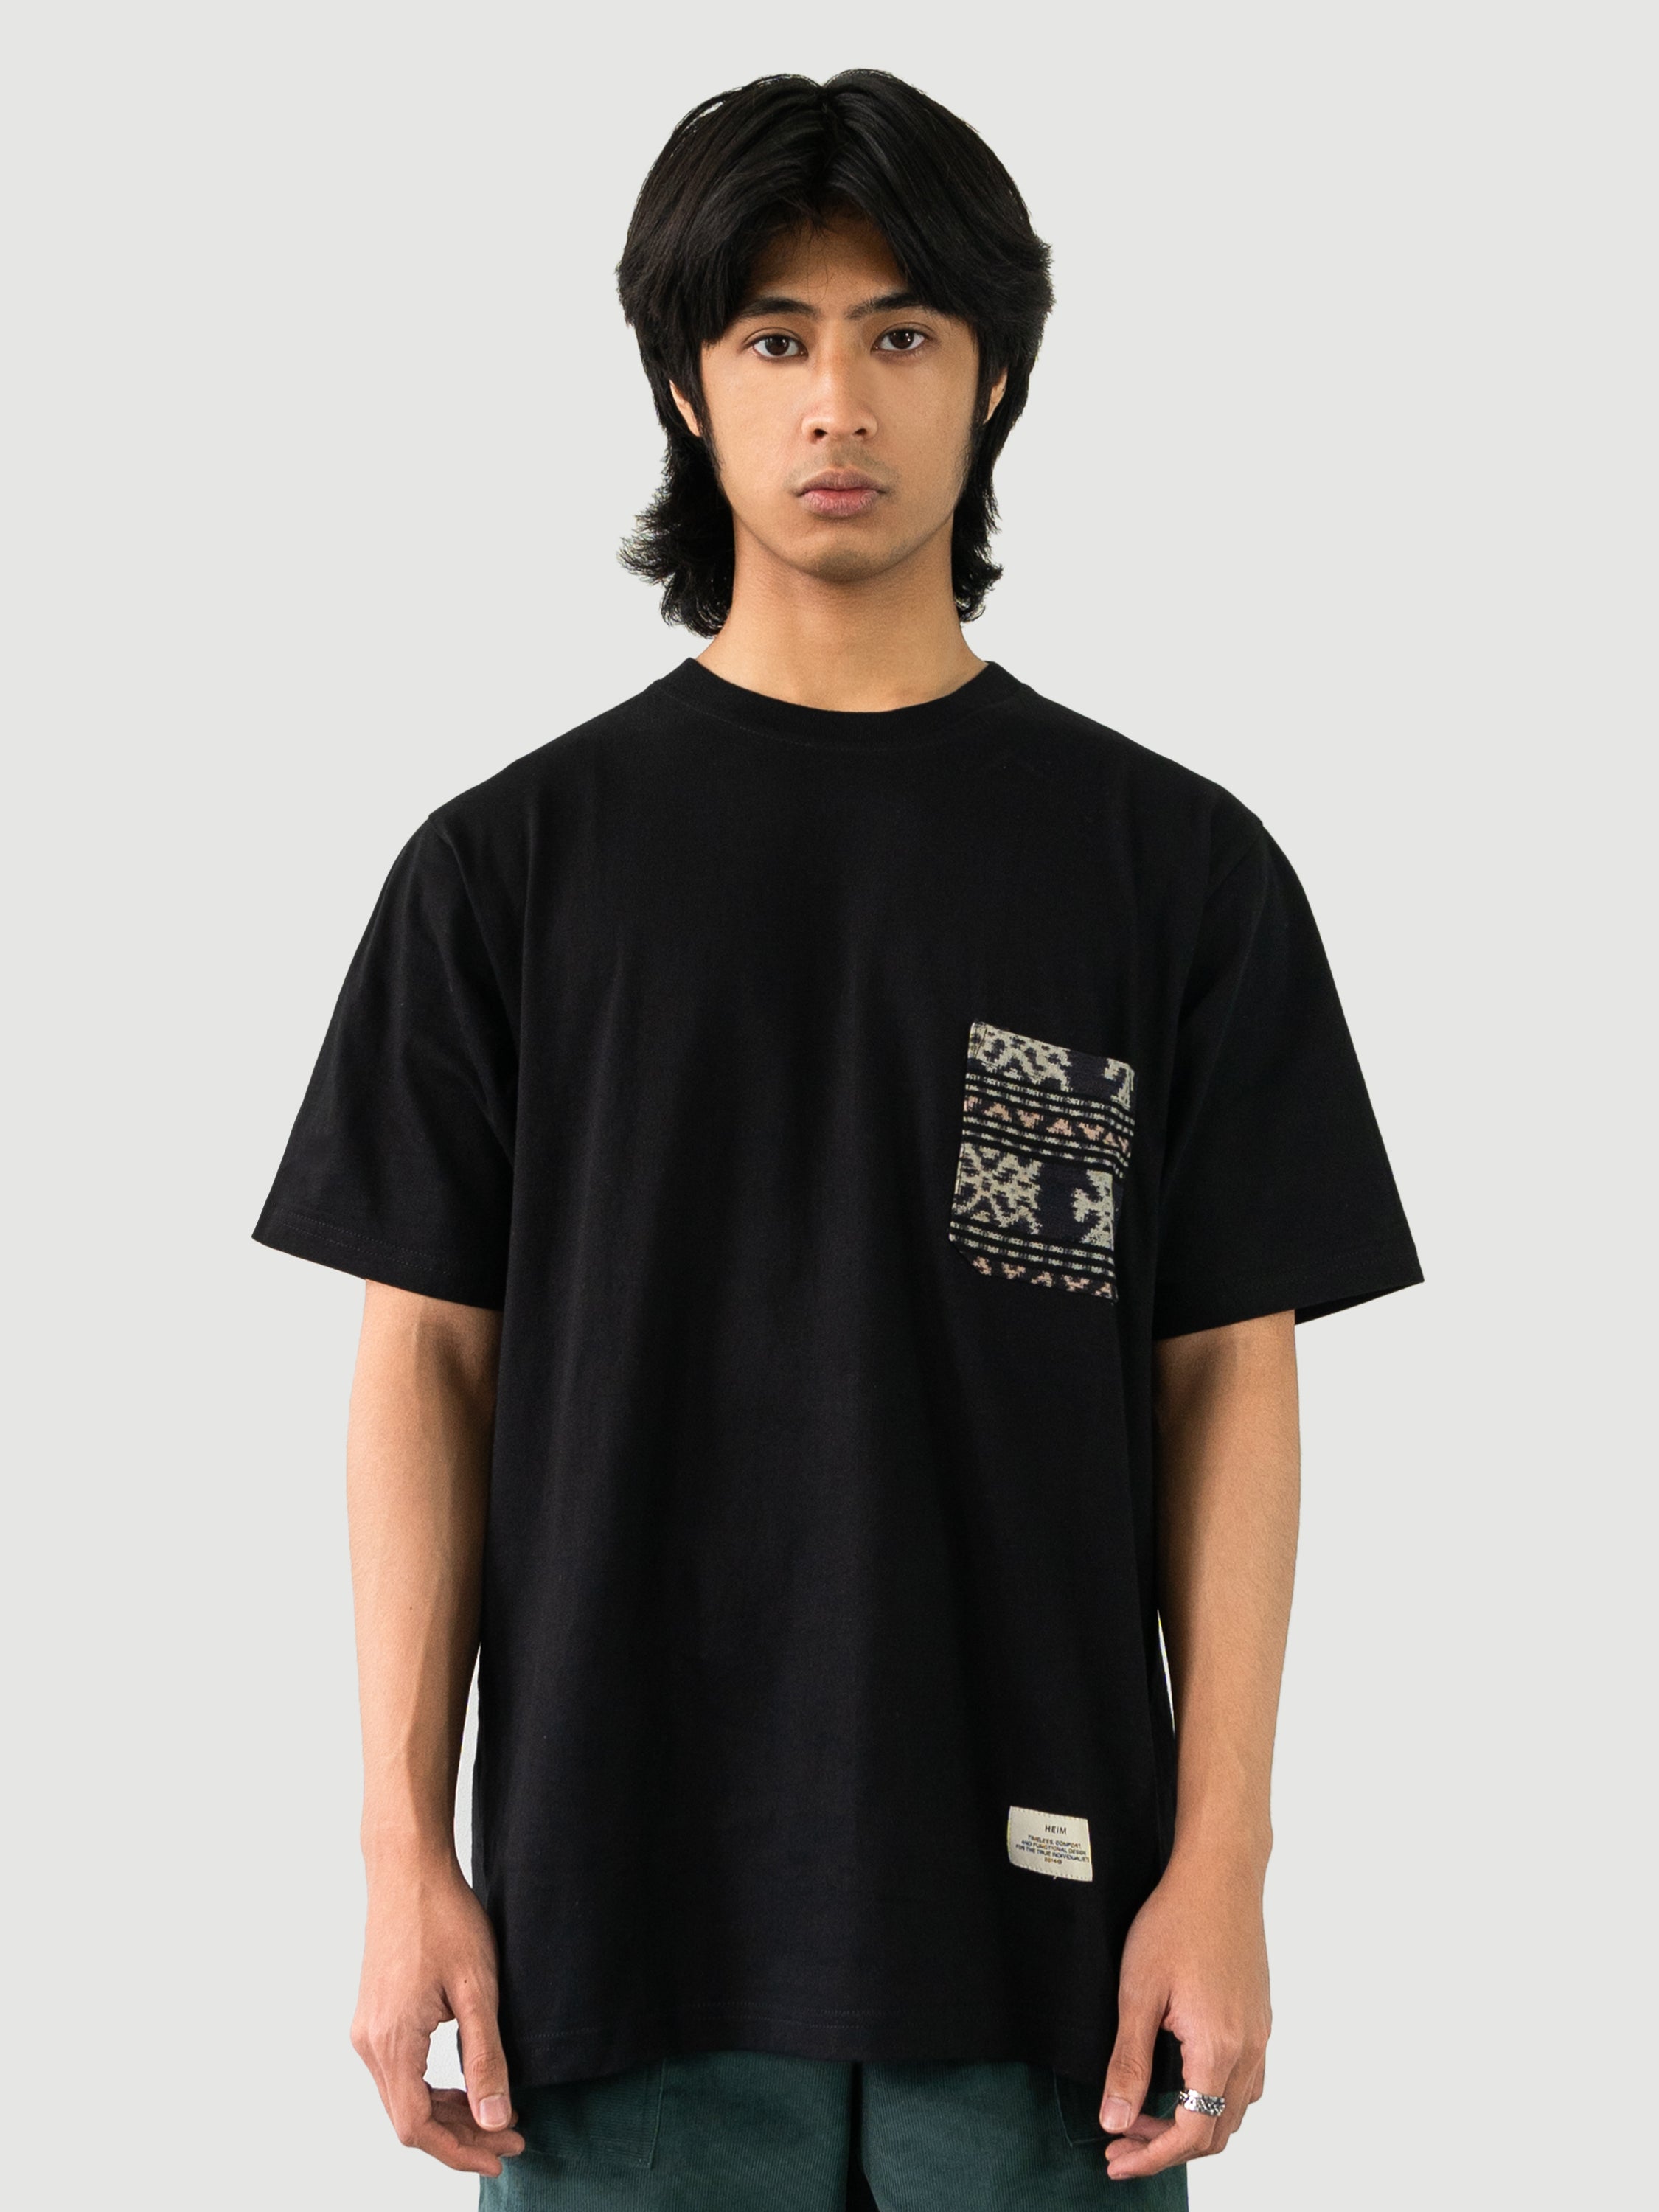 HEIM x Lewi's Tenun Black T-shirt - Men / T-shirt - HEIM | HEIM